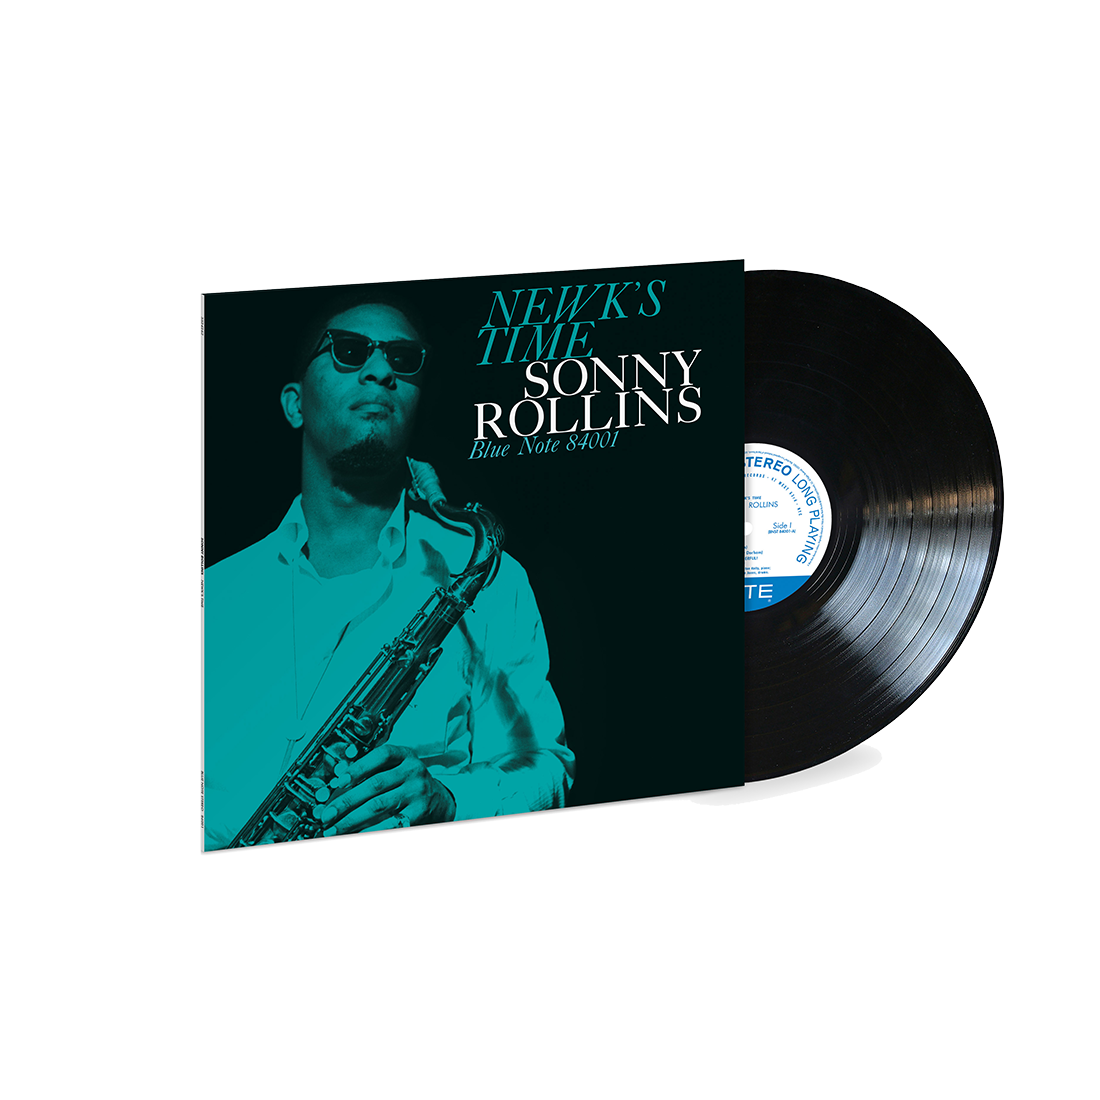 Sonny Rollins - Newk's Time (Classic Vinyl): Vinyl LP